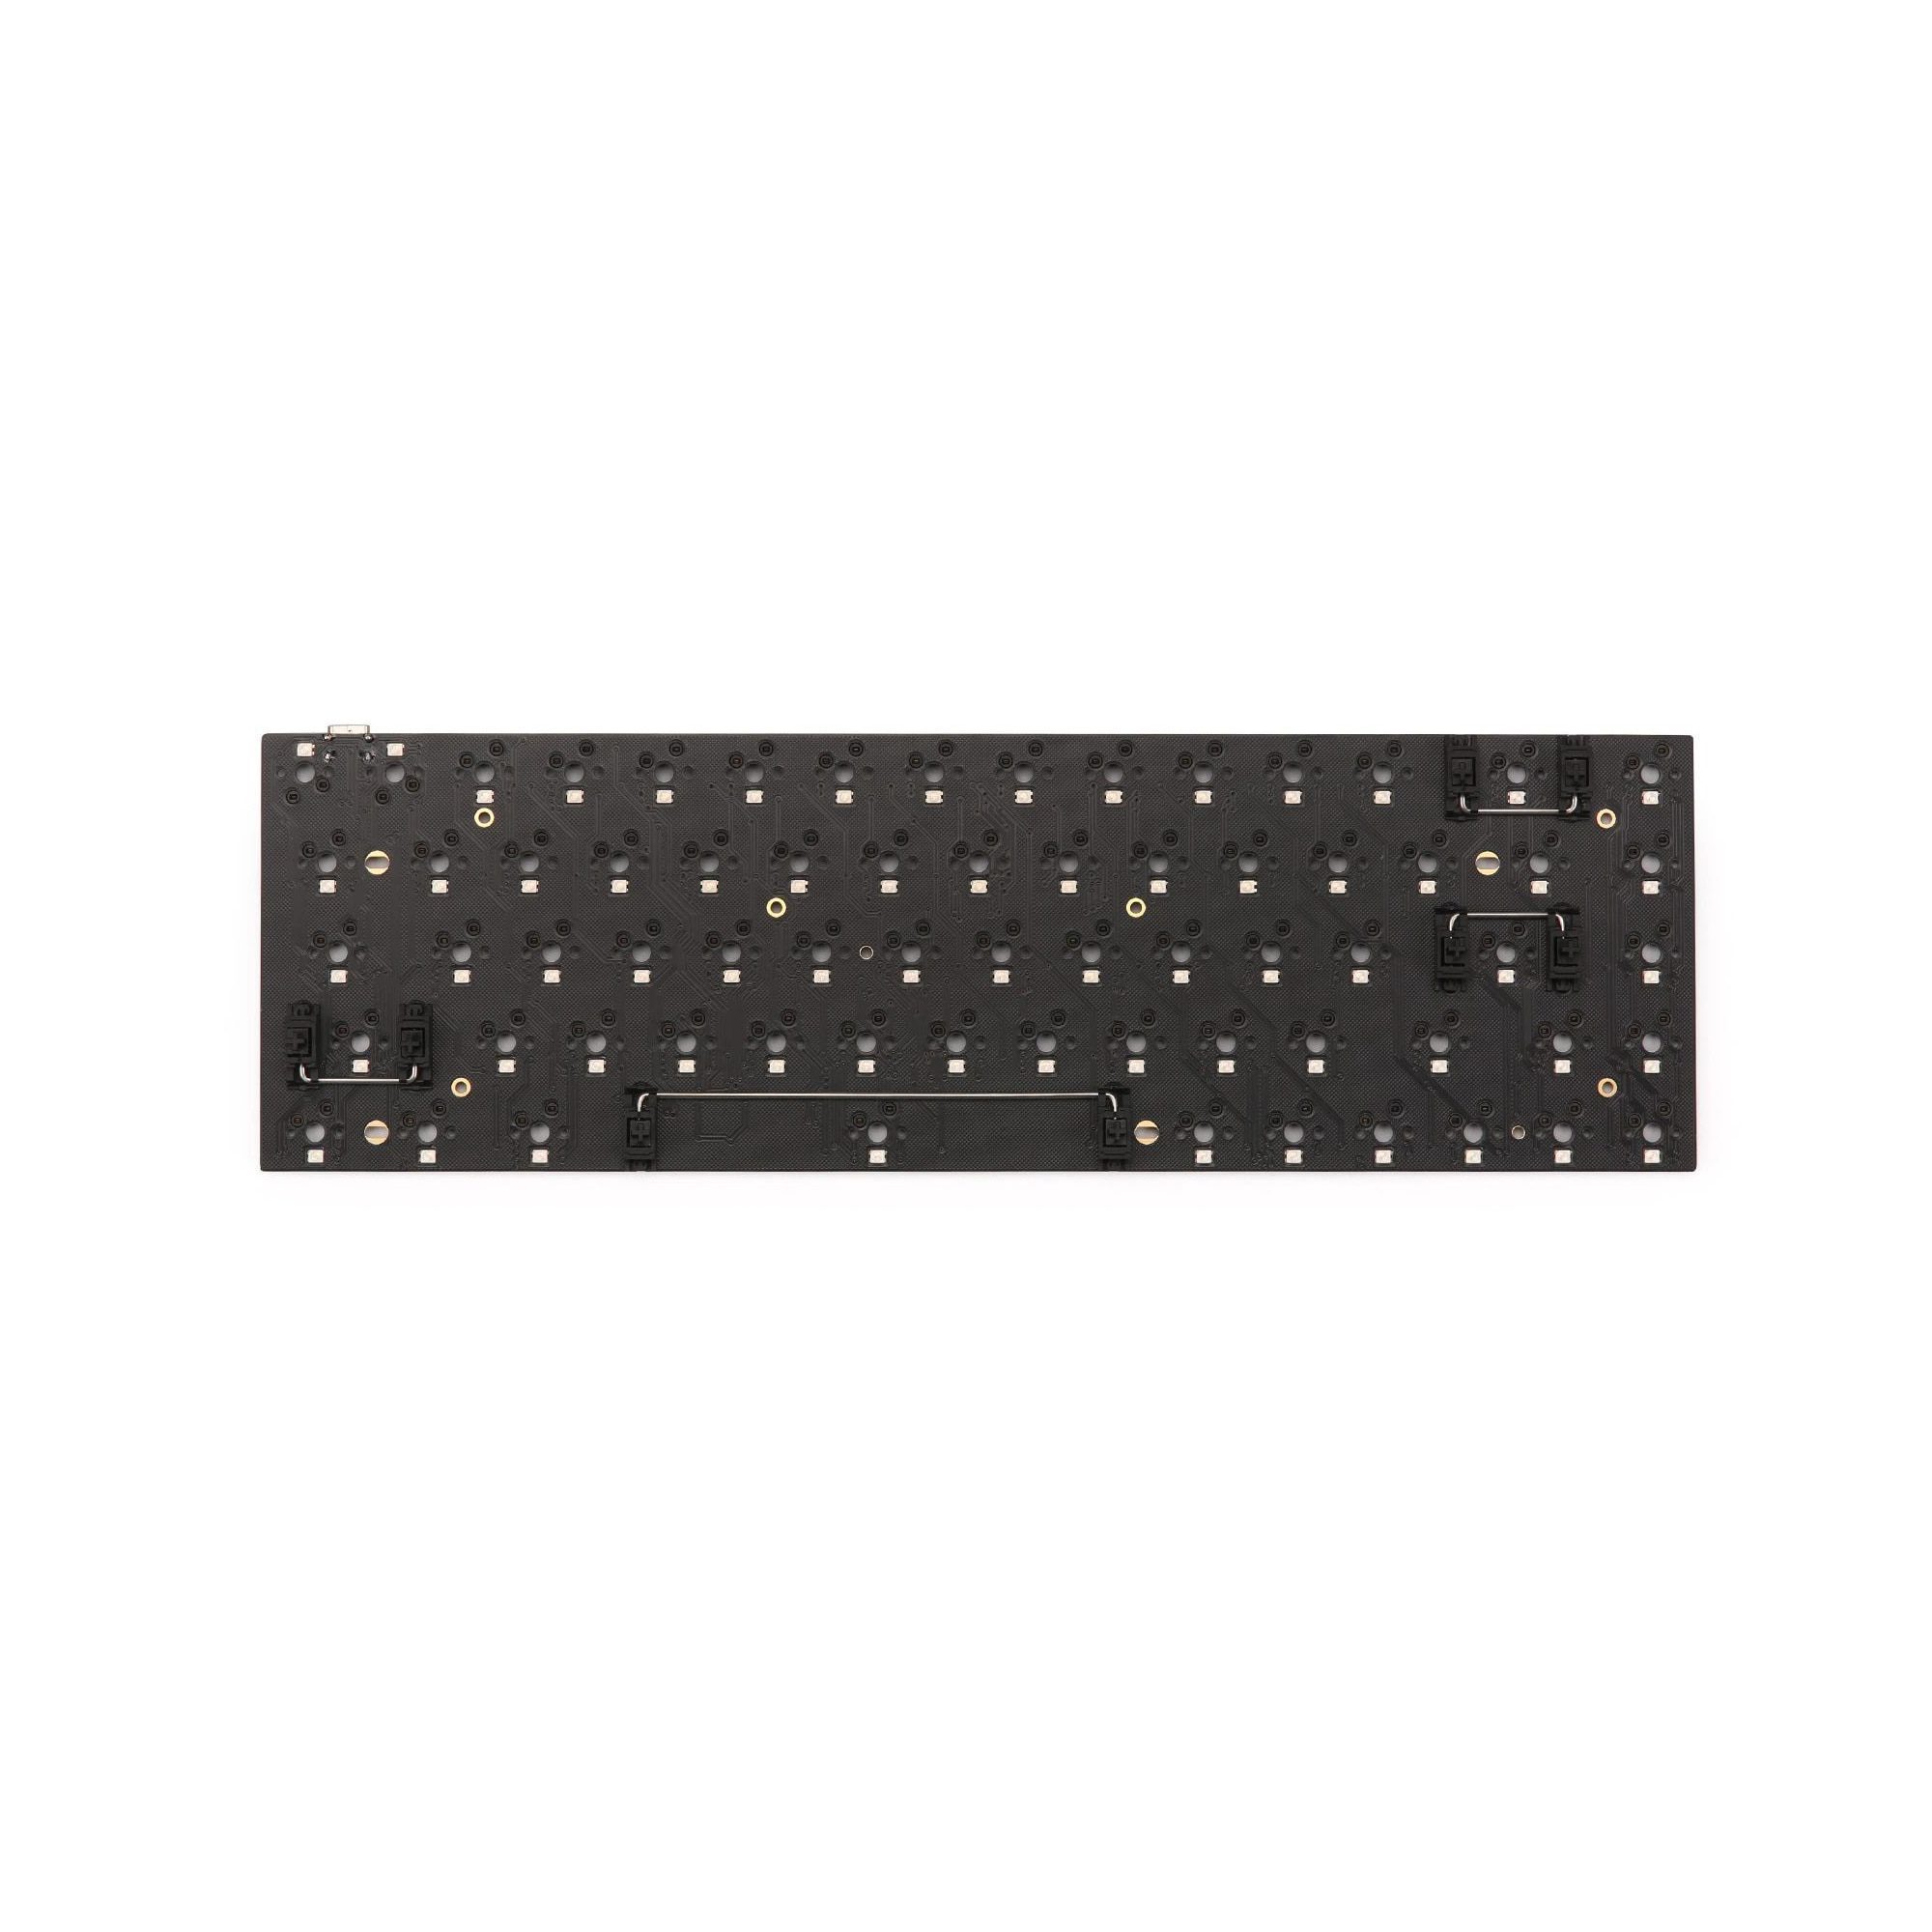 KBDfans DZ65 RGB V3 Hot Swap PCB For Customized Mechanical Keyboard